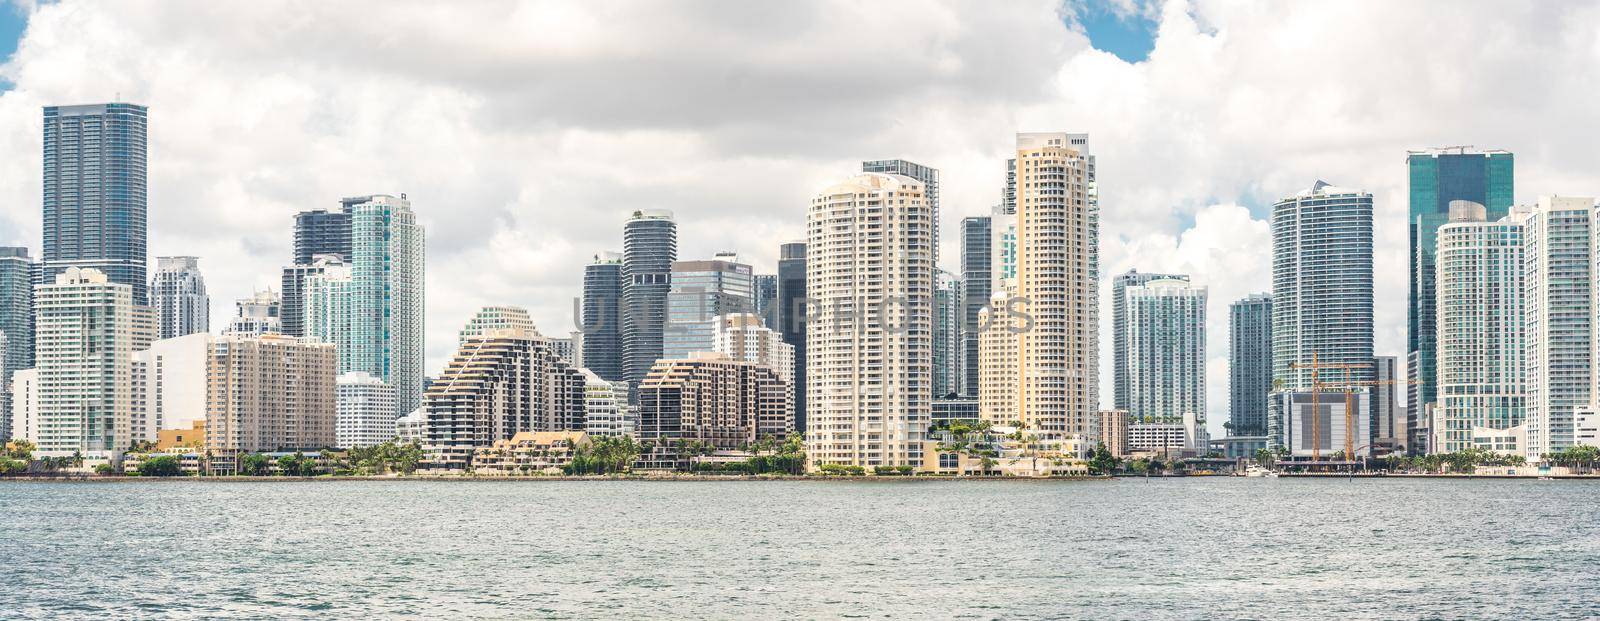 Miami, USA - September 11, 2019: Miami Downtown skyline in daytime in Biscayne Bay by Mariakray